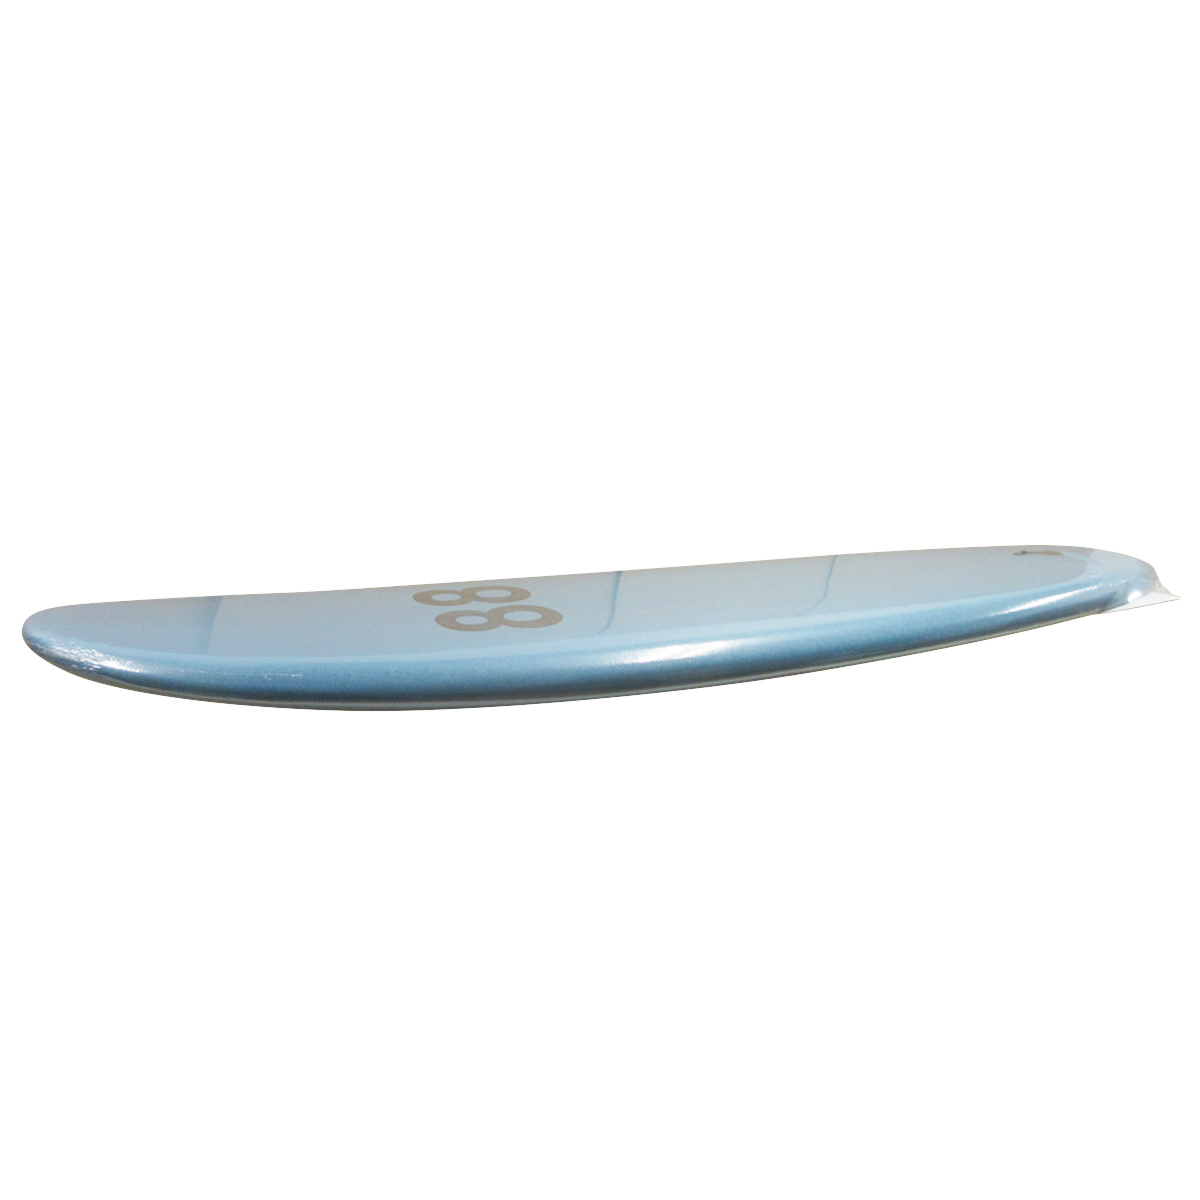 88 SURFBOARDS / THRUSTER 7`0 STEEL BLUE